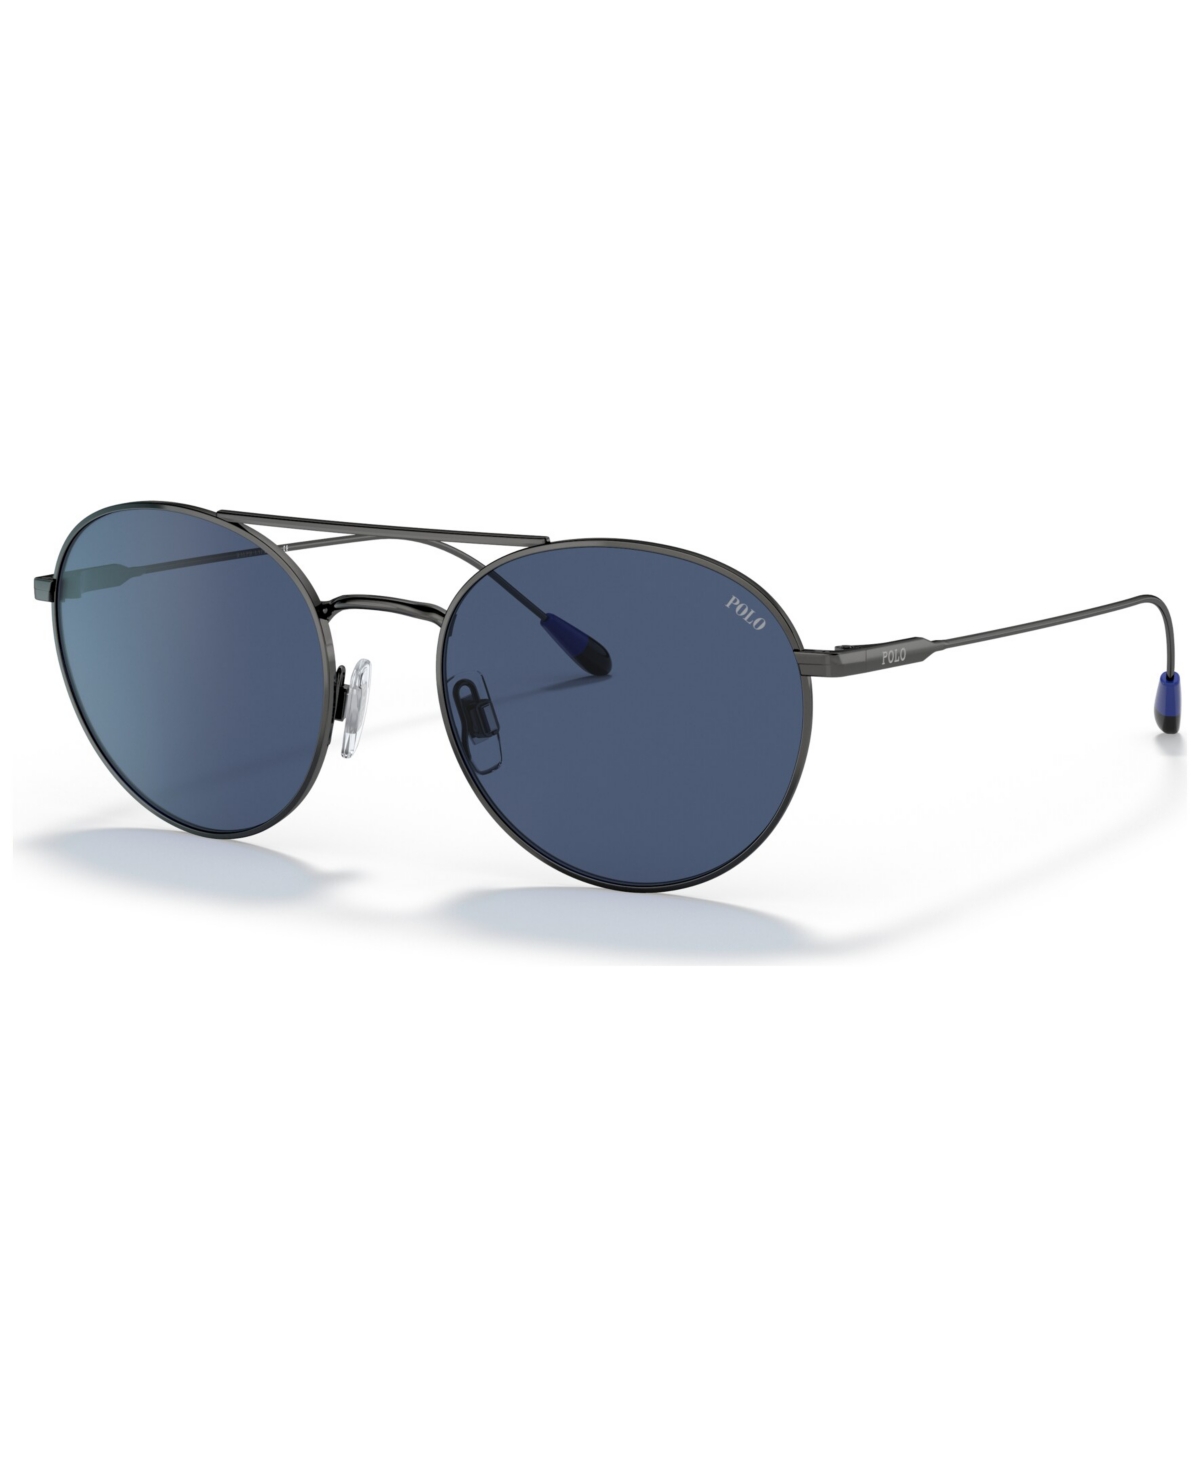 Polo Ralph Lauren Men's Sunglasses, Ph3136 In Shiny Dark Gunmetal